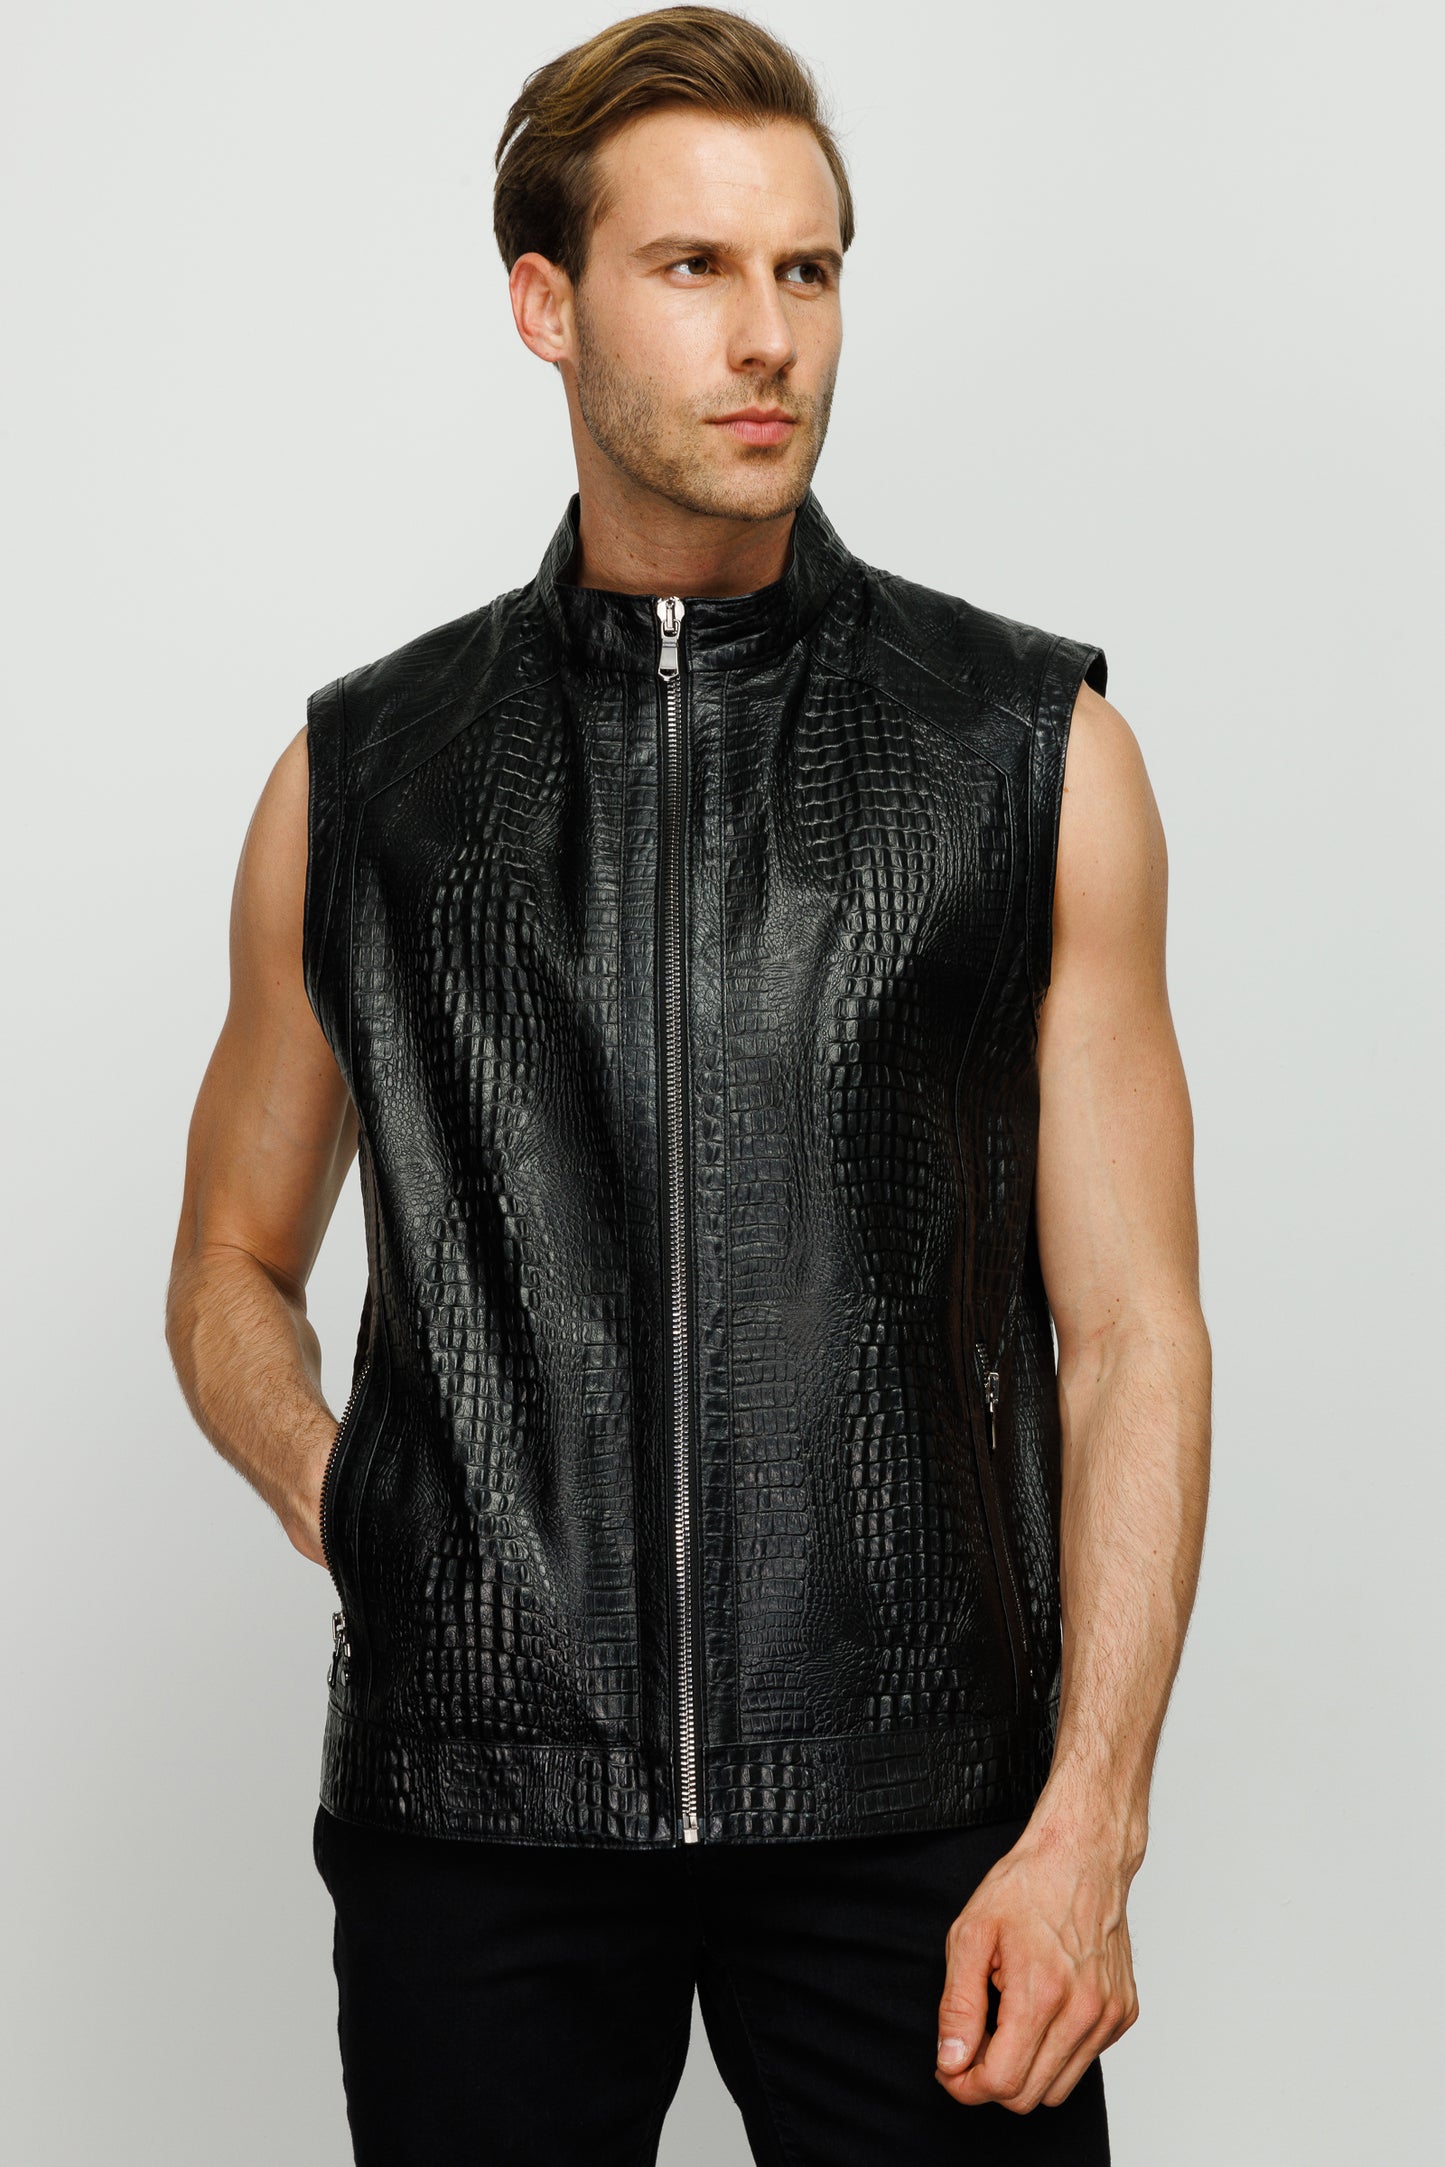 The Veyo Black Leathern Vest Men Jacket